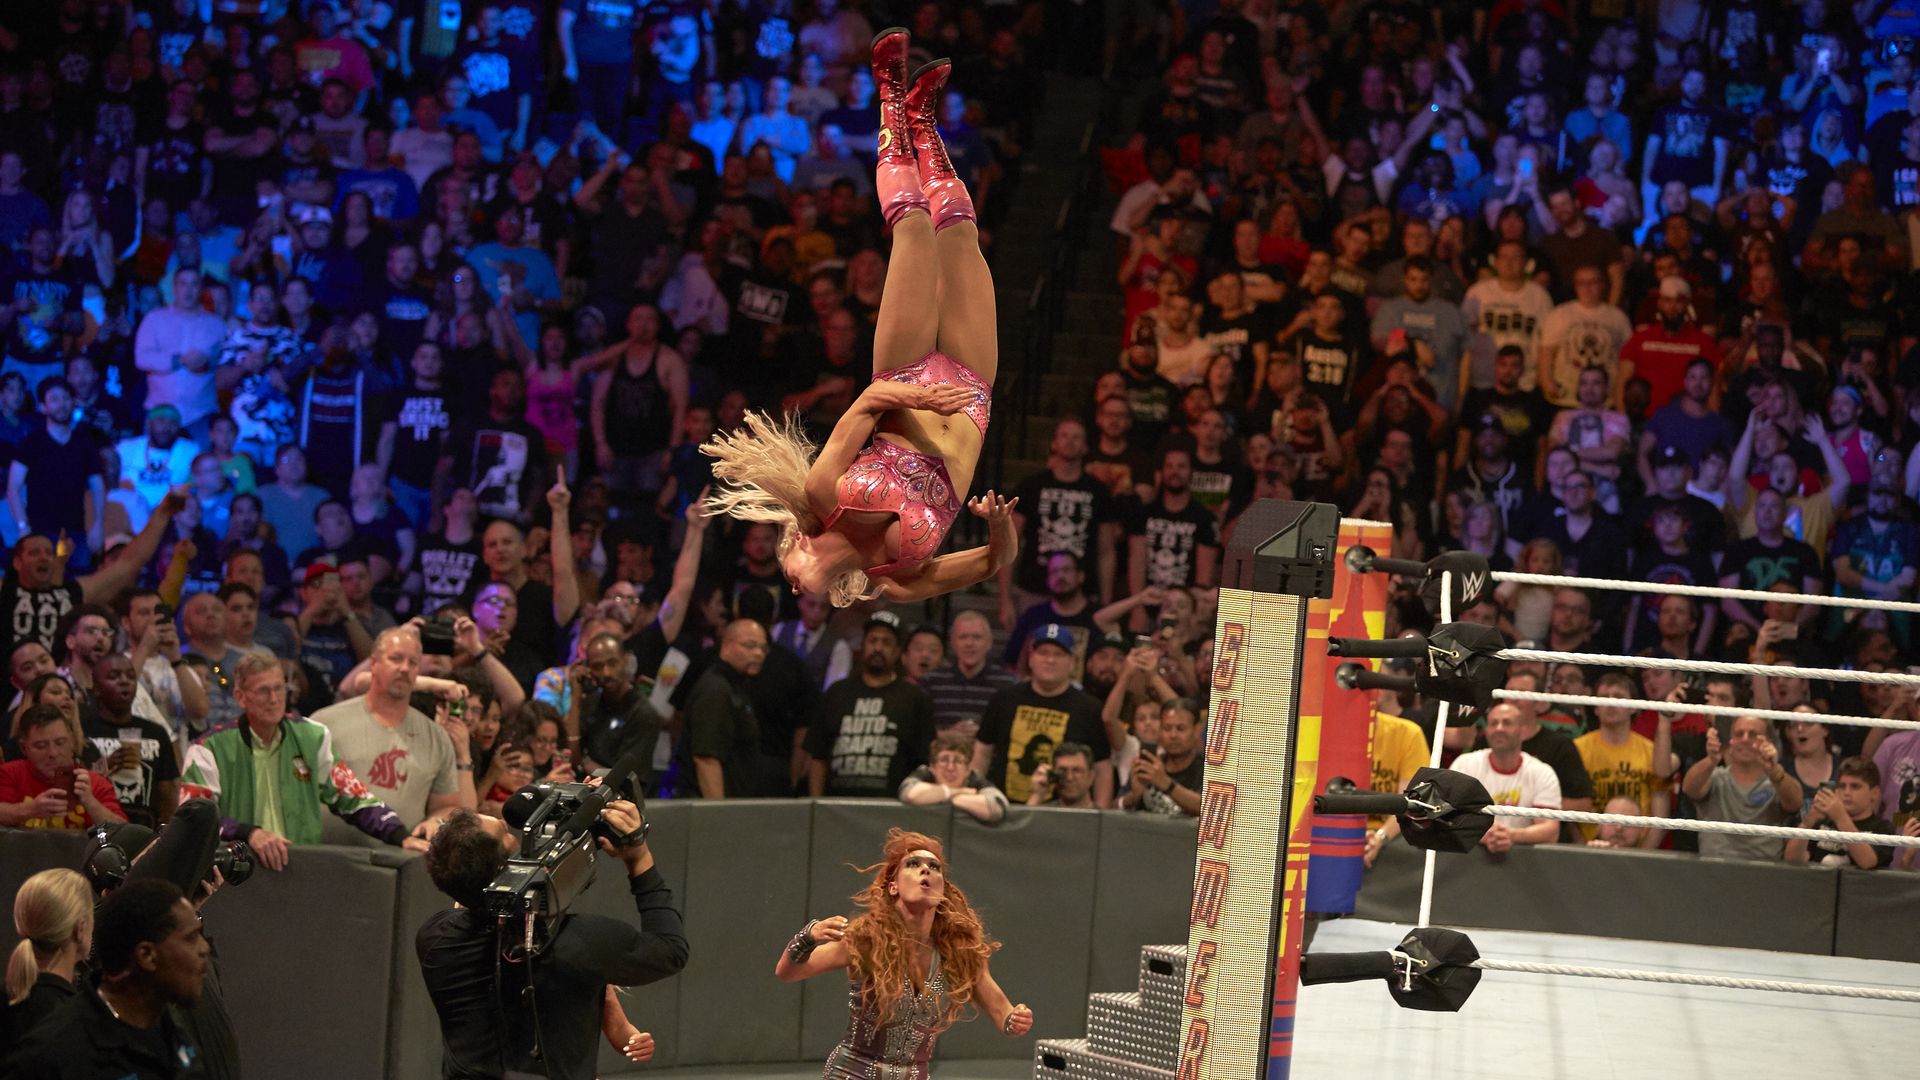 A wrestler twirls vertically in the air as spectators watch.